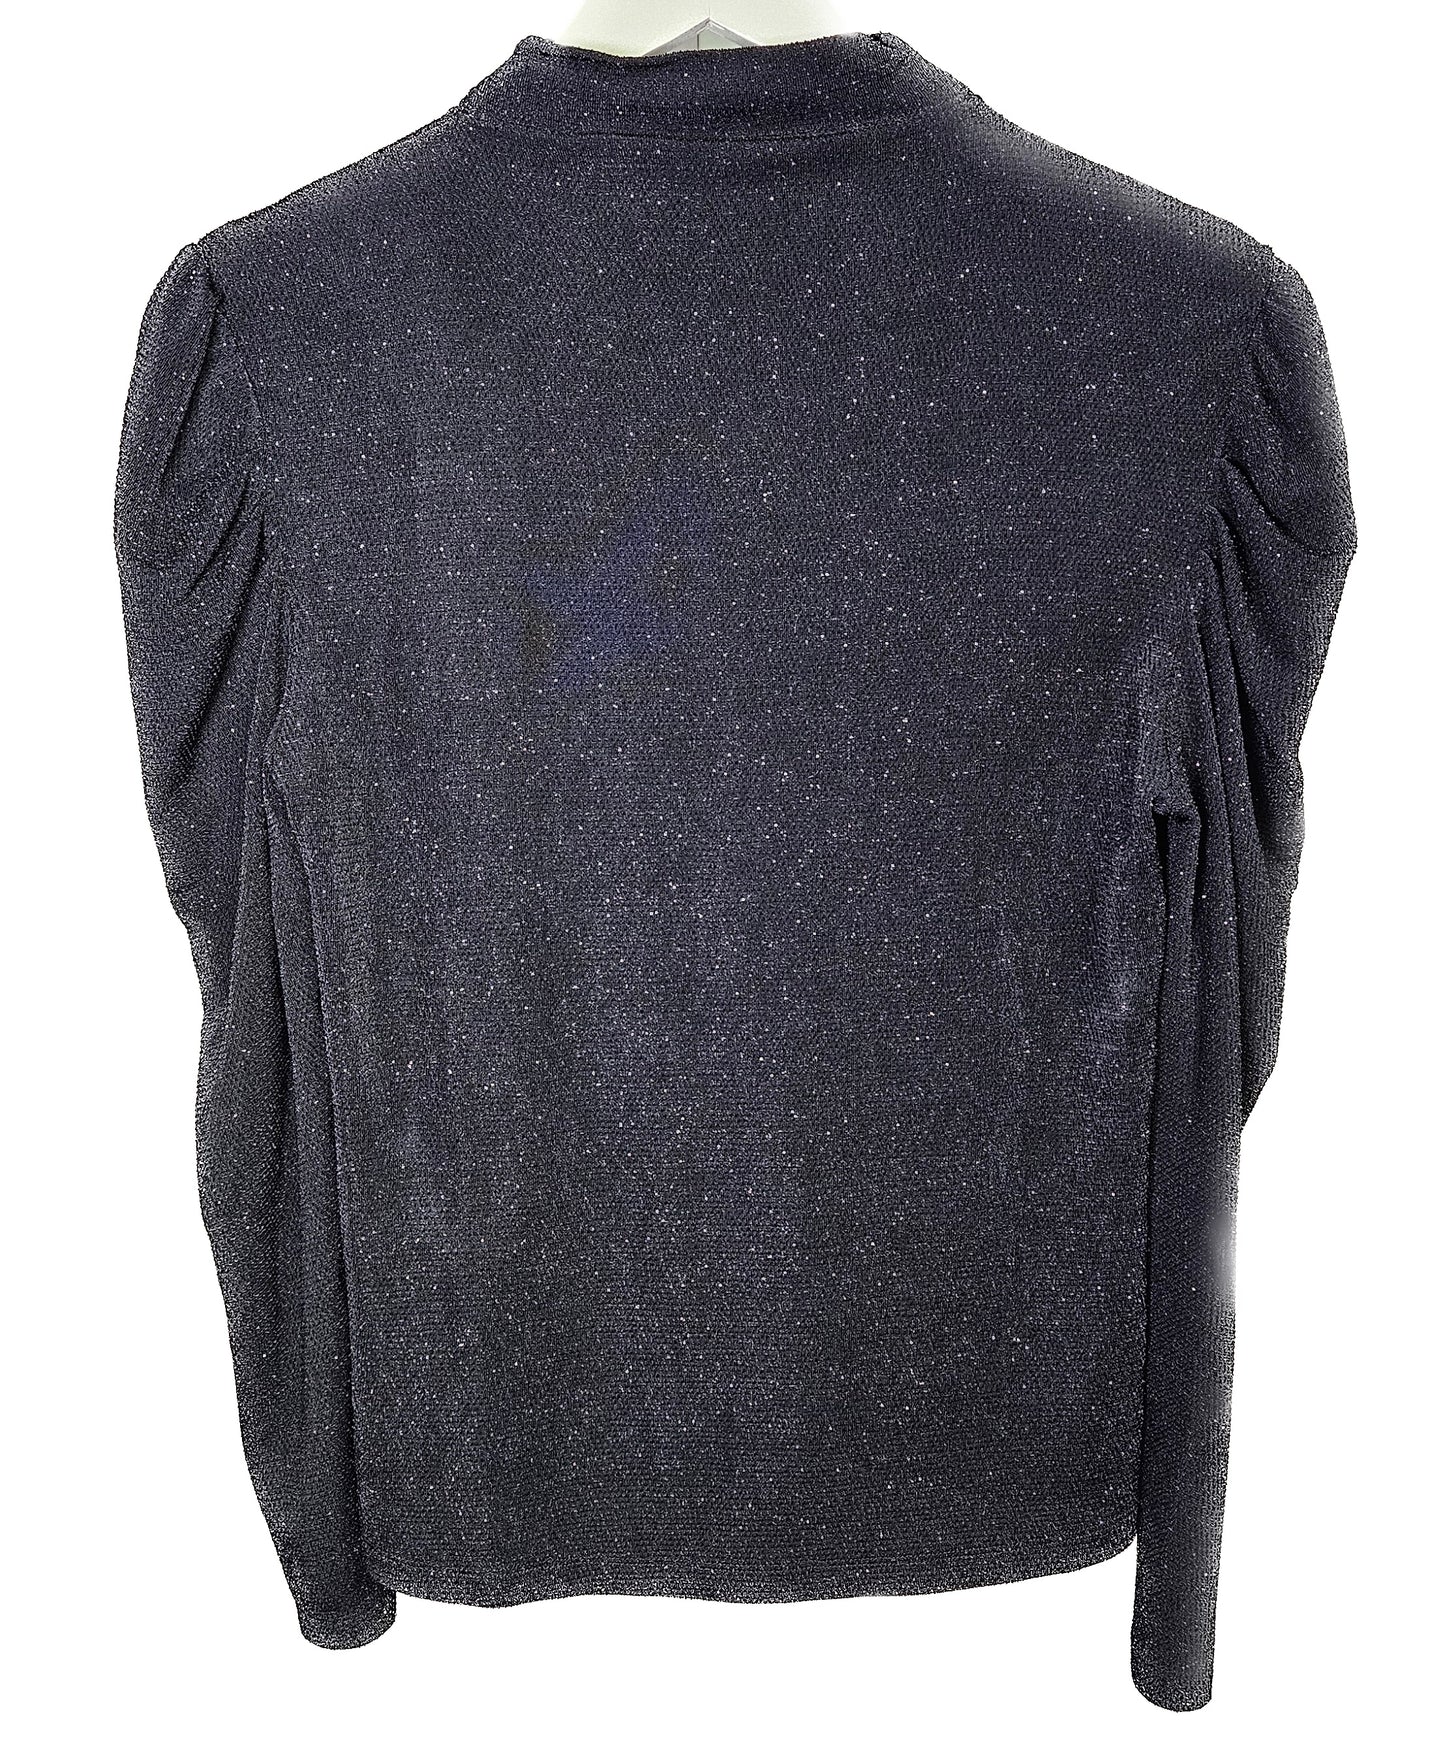 IRO Black Sparkle Sweater